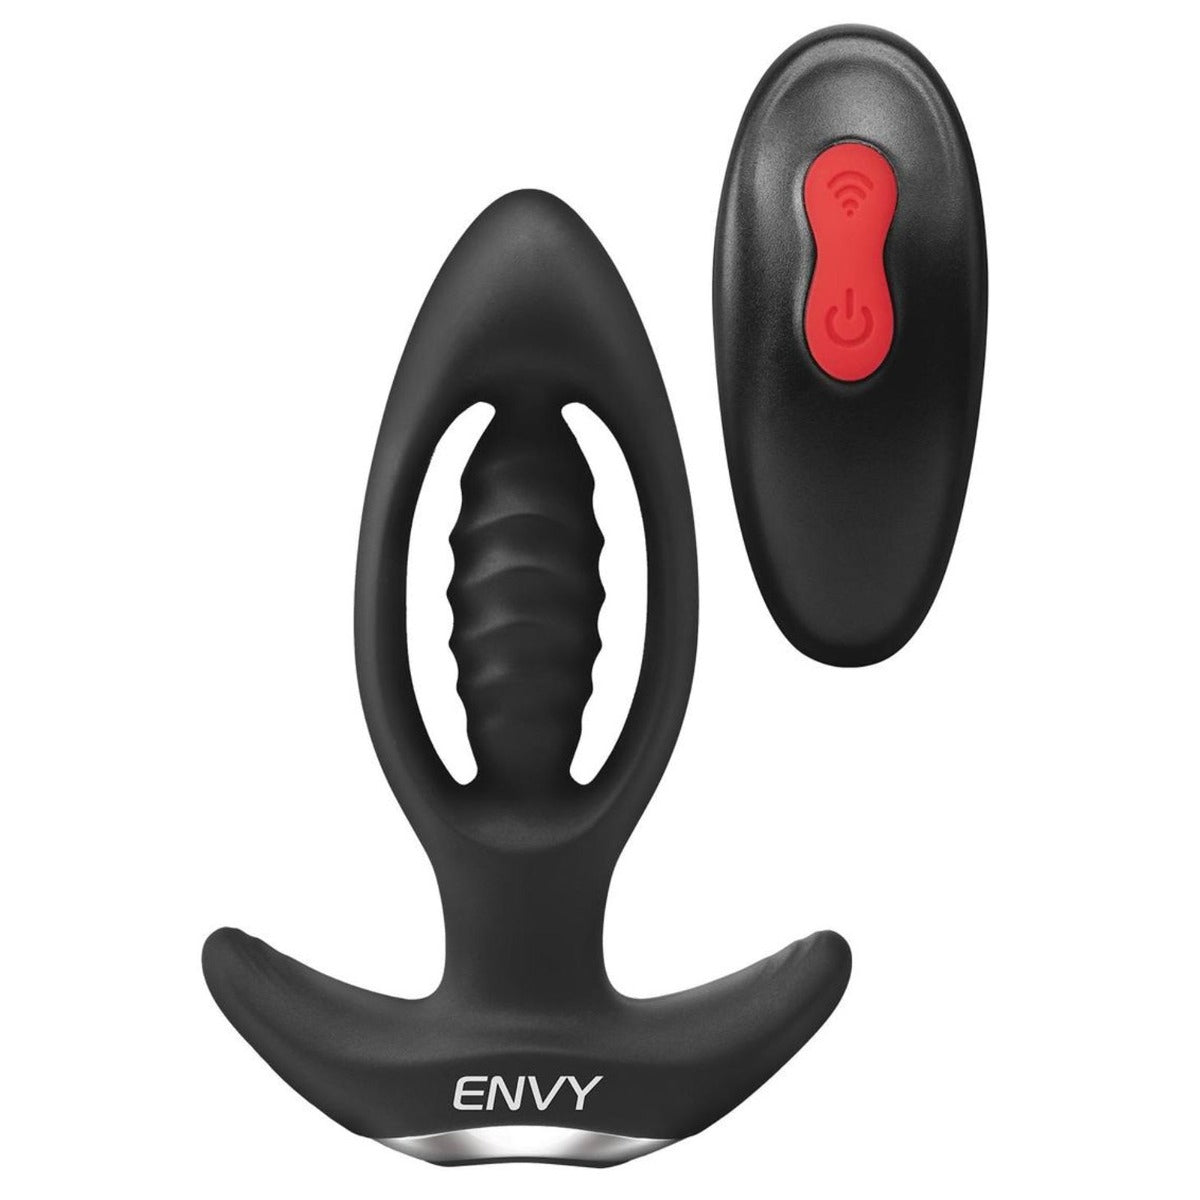 Envy Enticer Expander Vibrating Butt Plug With Remote Control Black